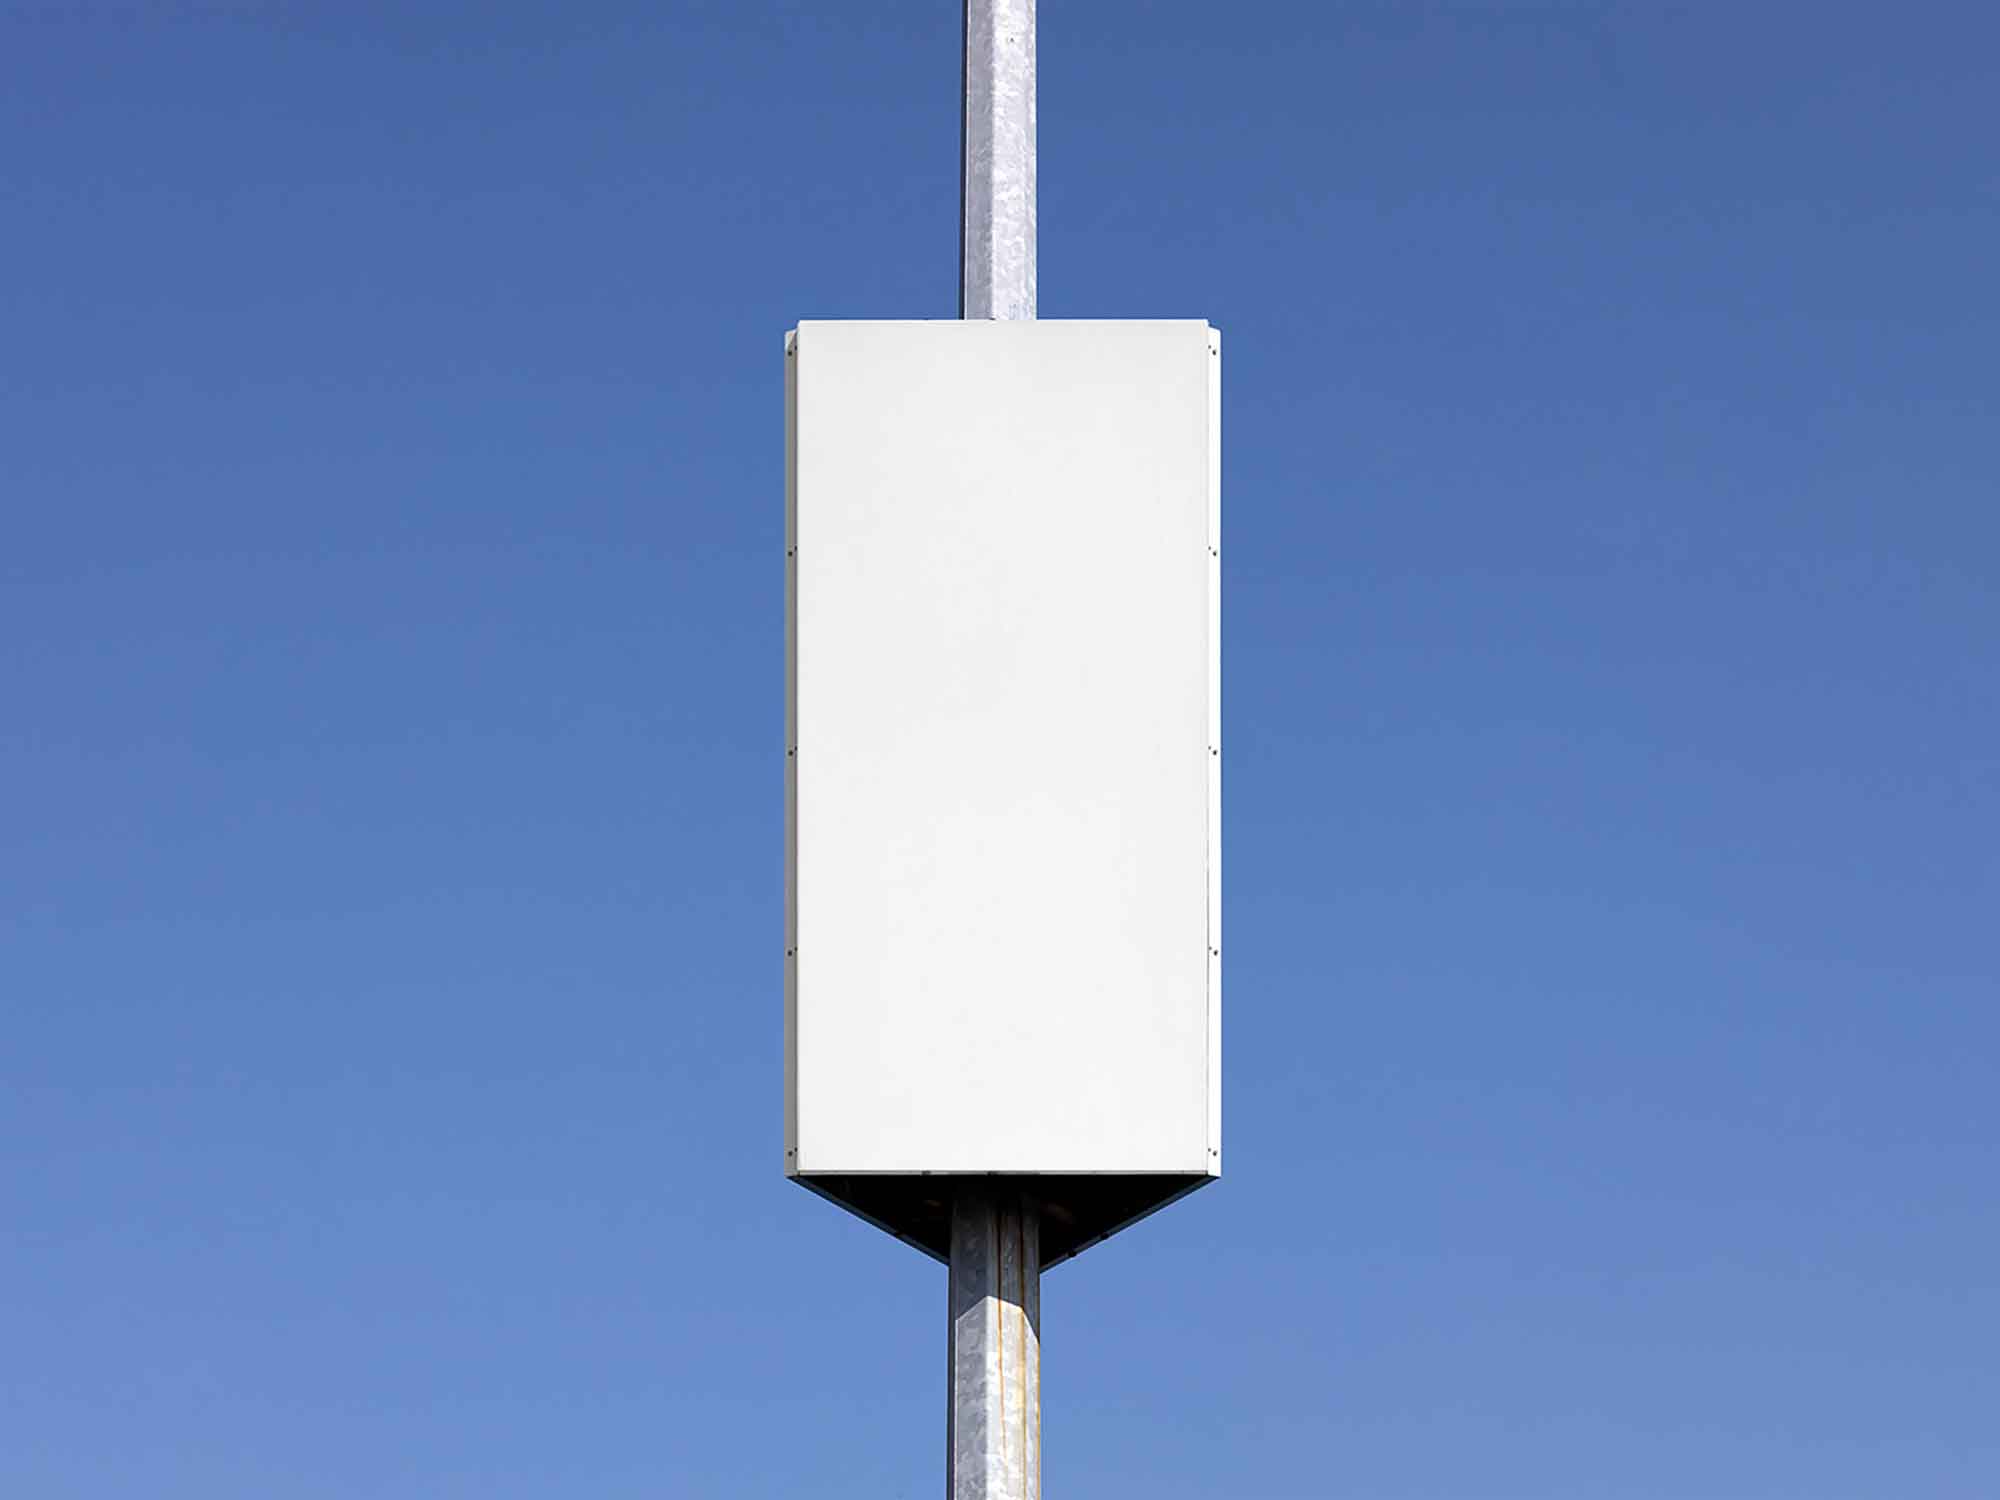 Pole Sign Mockup PSD